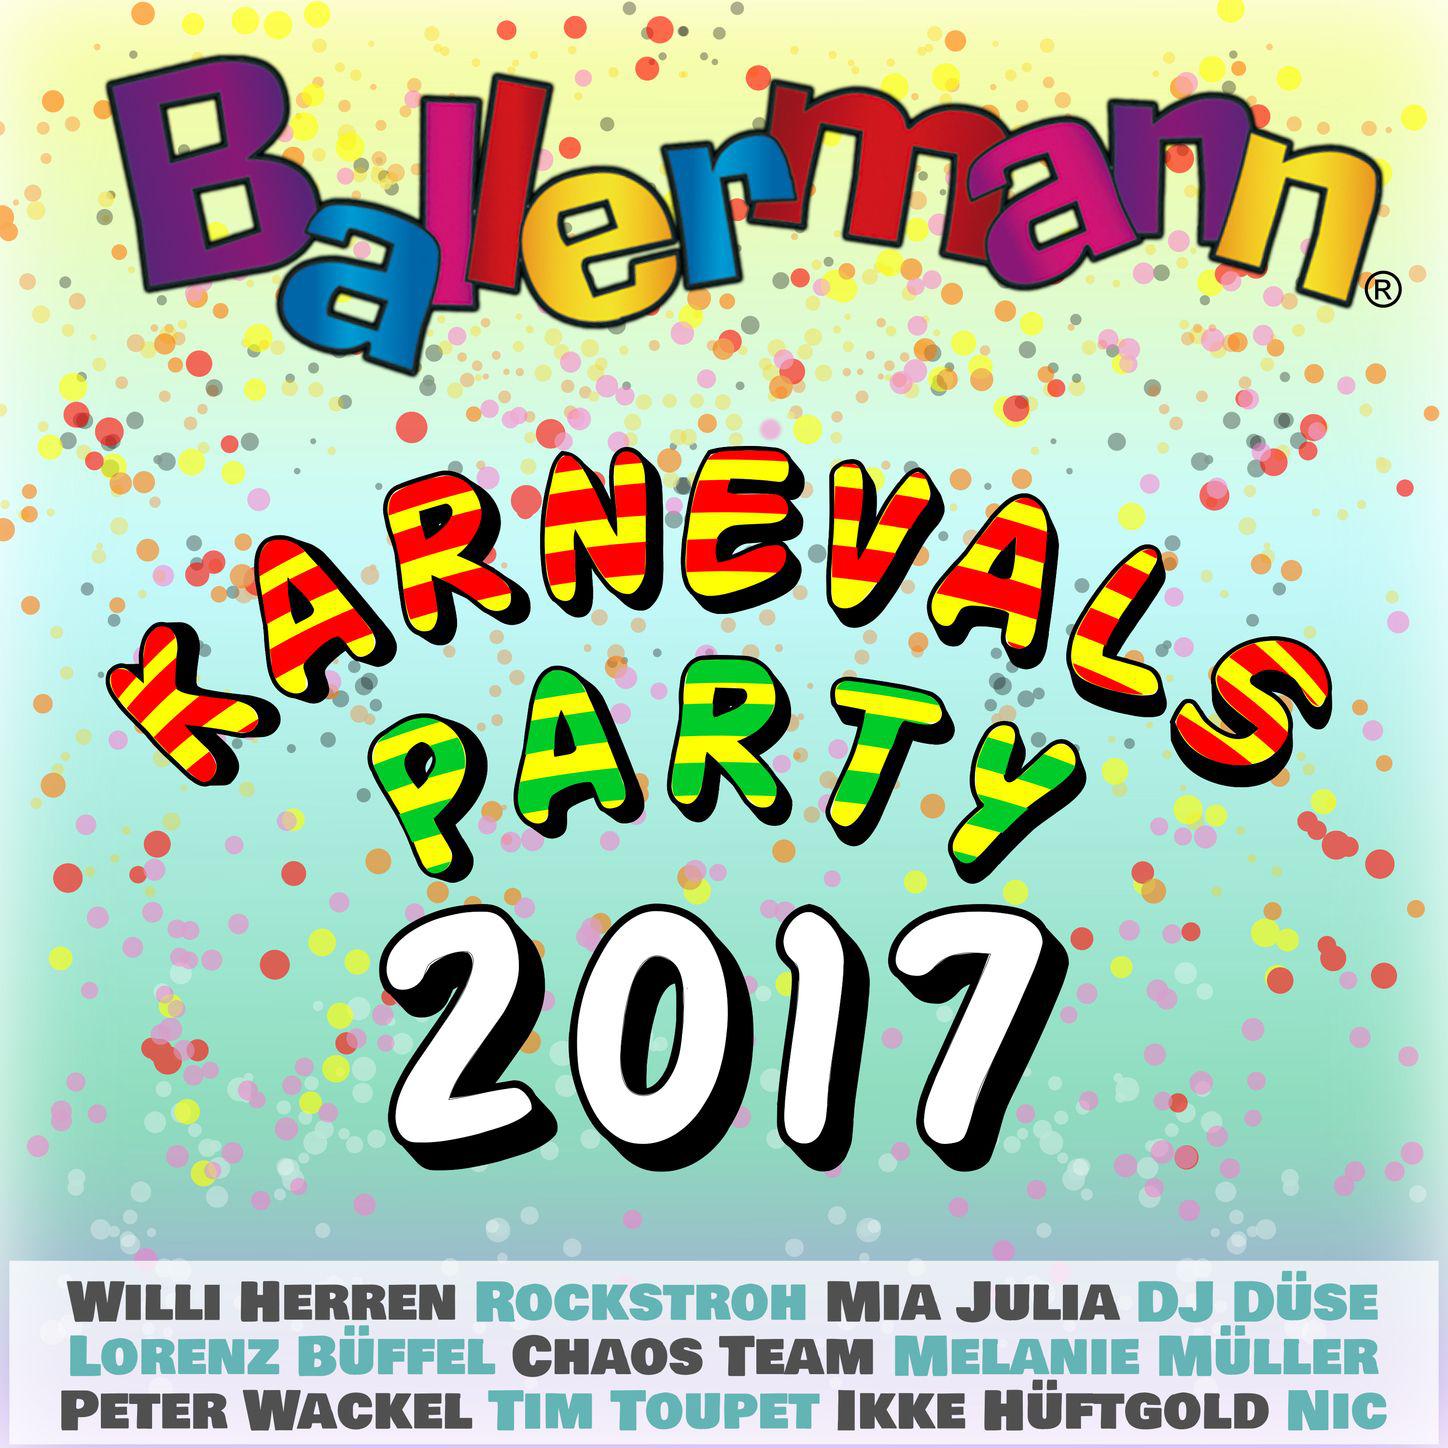 Ballermann Karnevalsparty 2017